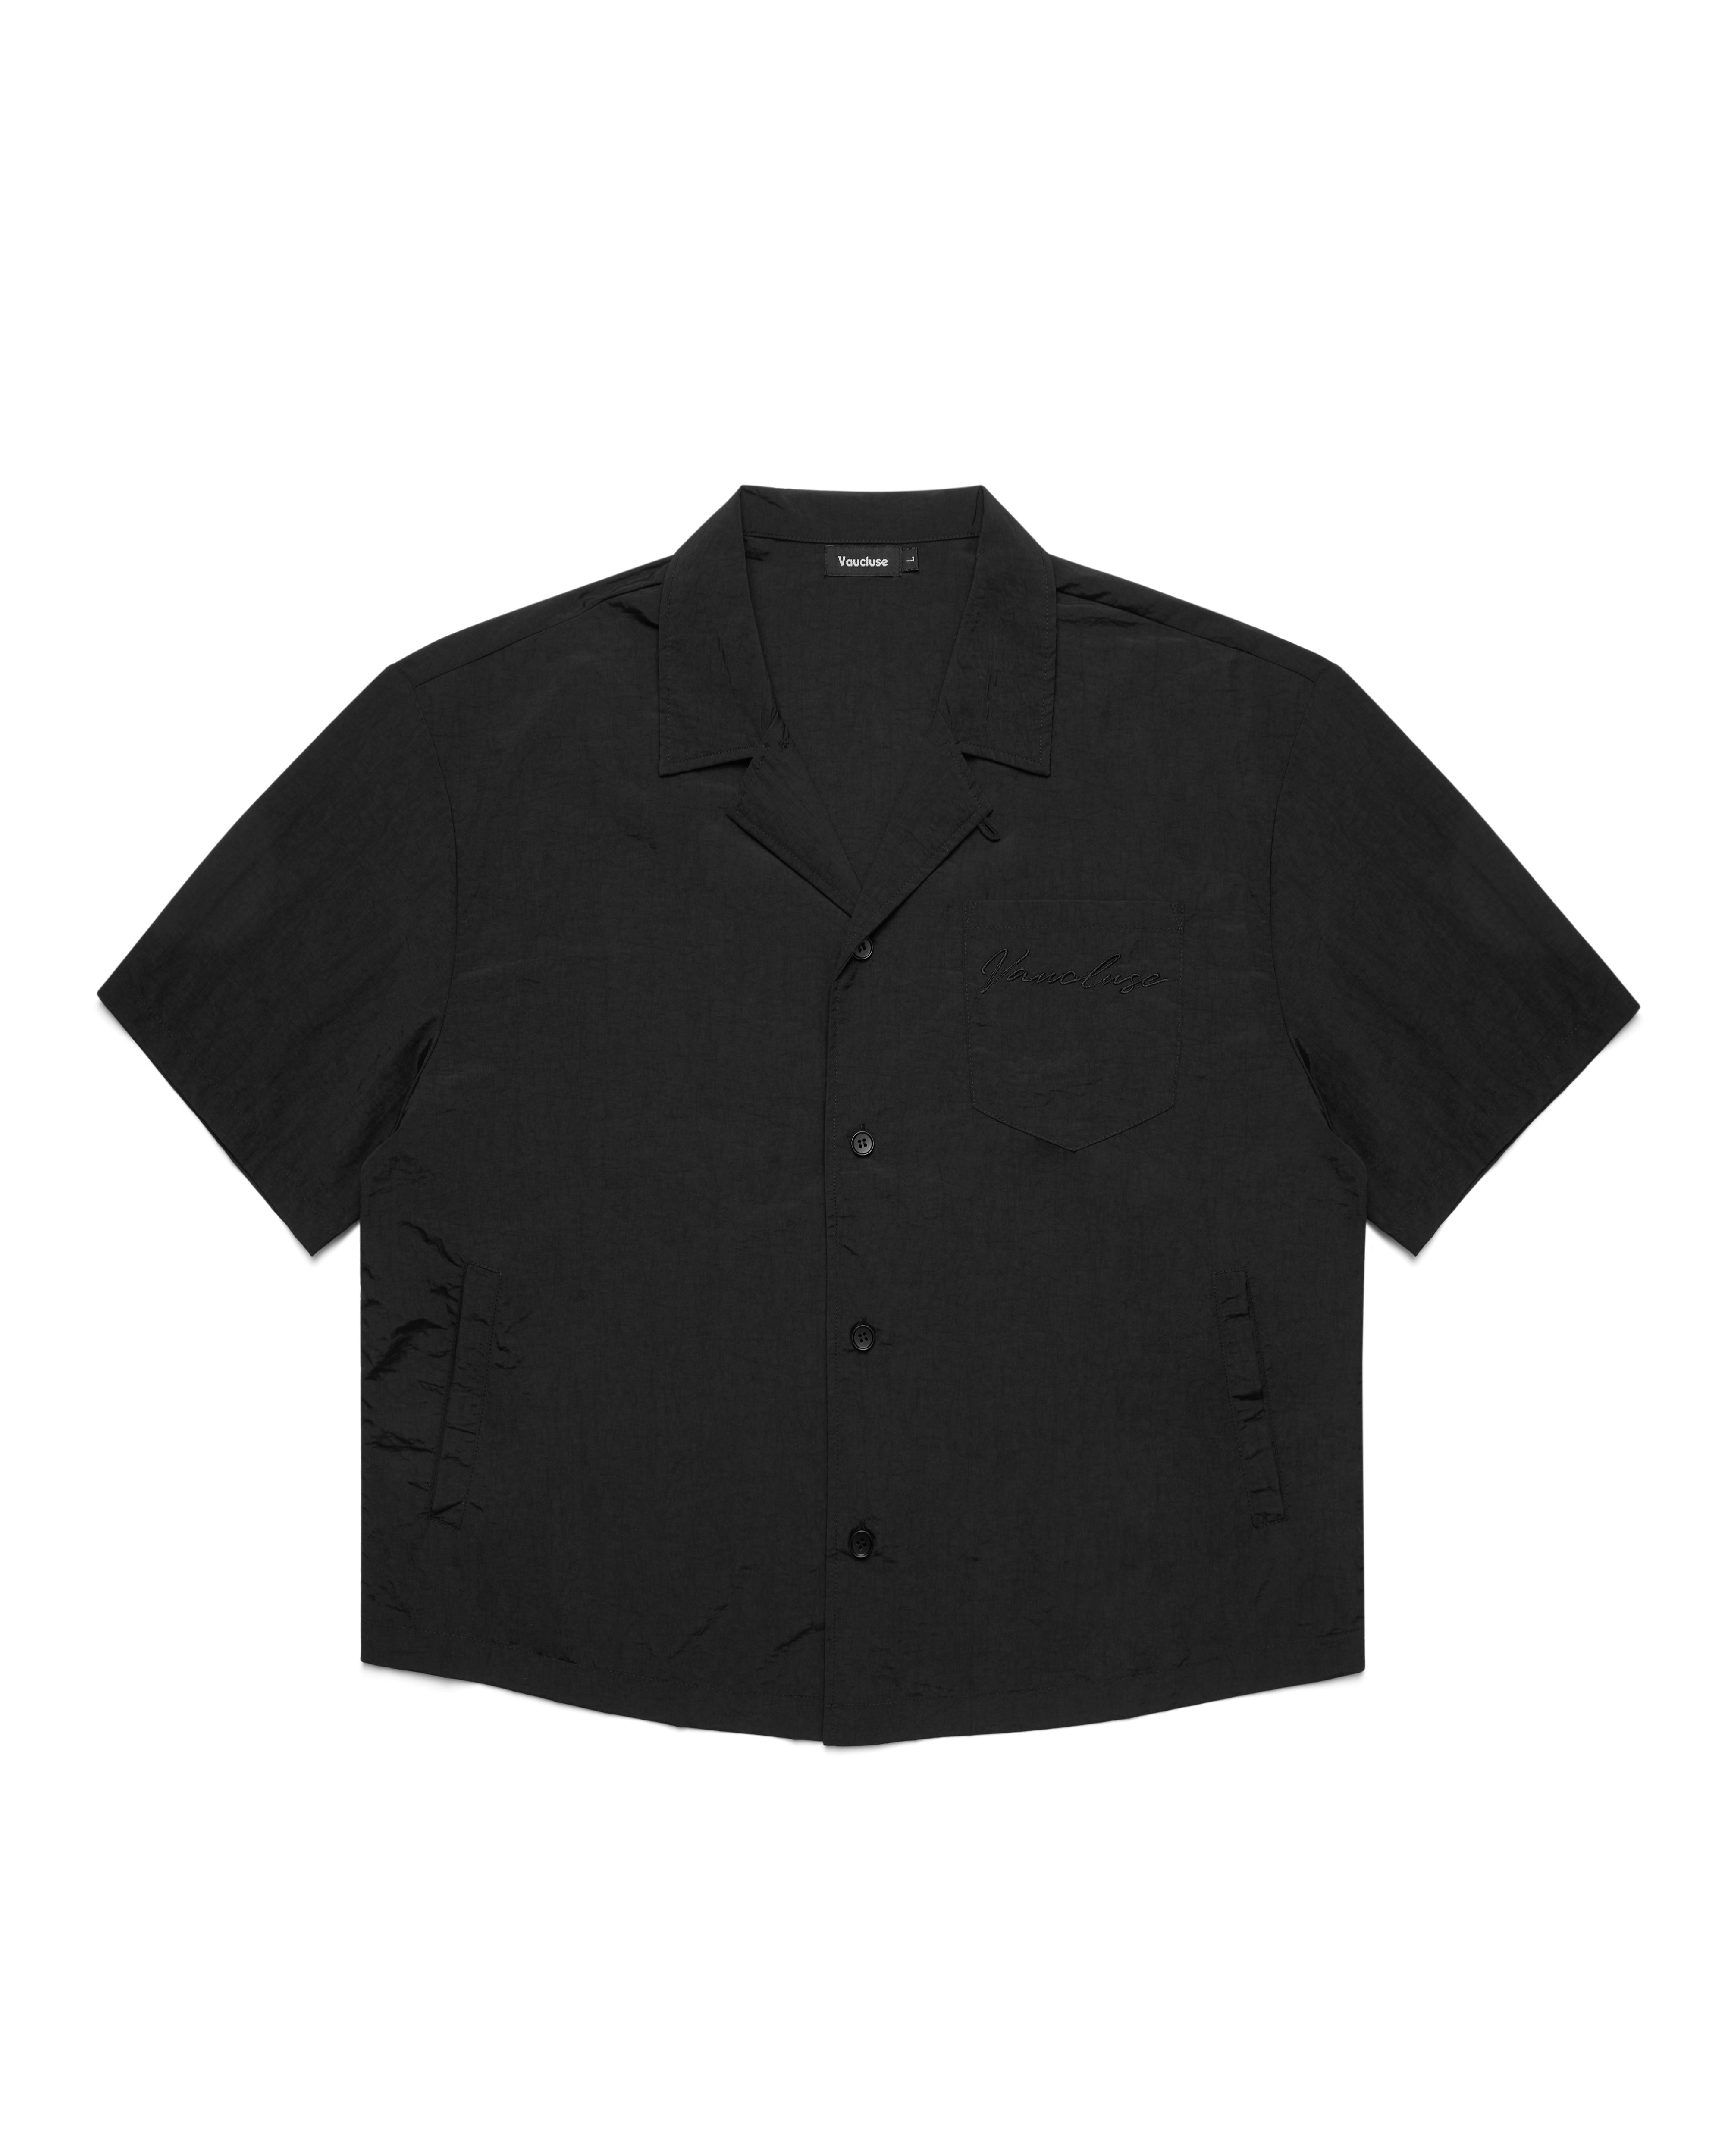 Nylon Signature Short Sleeved Shirt - Black – VAUCLUSE STUDIOS